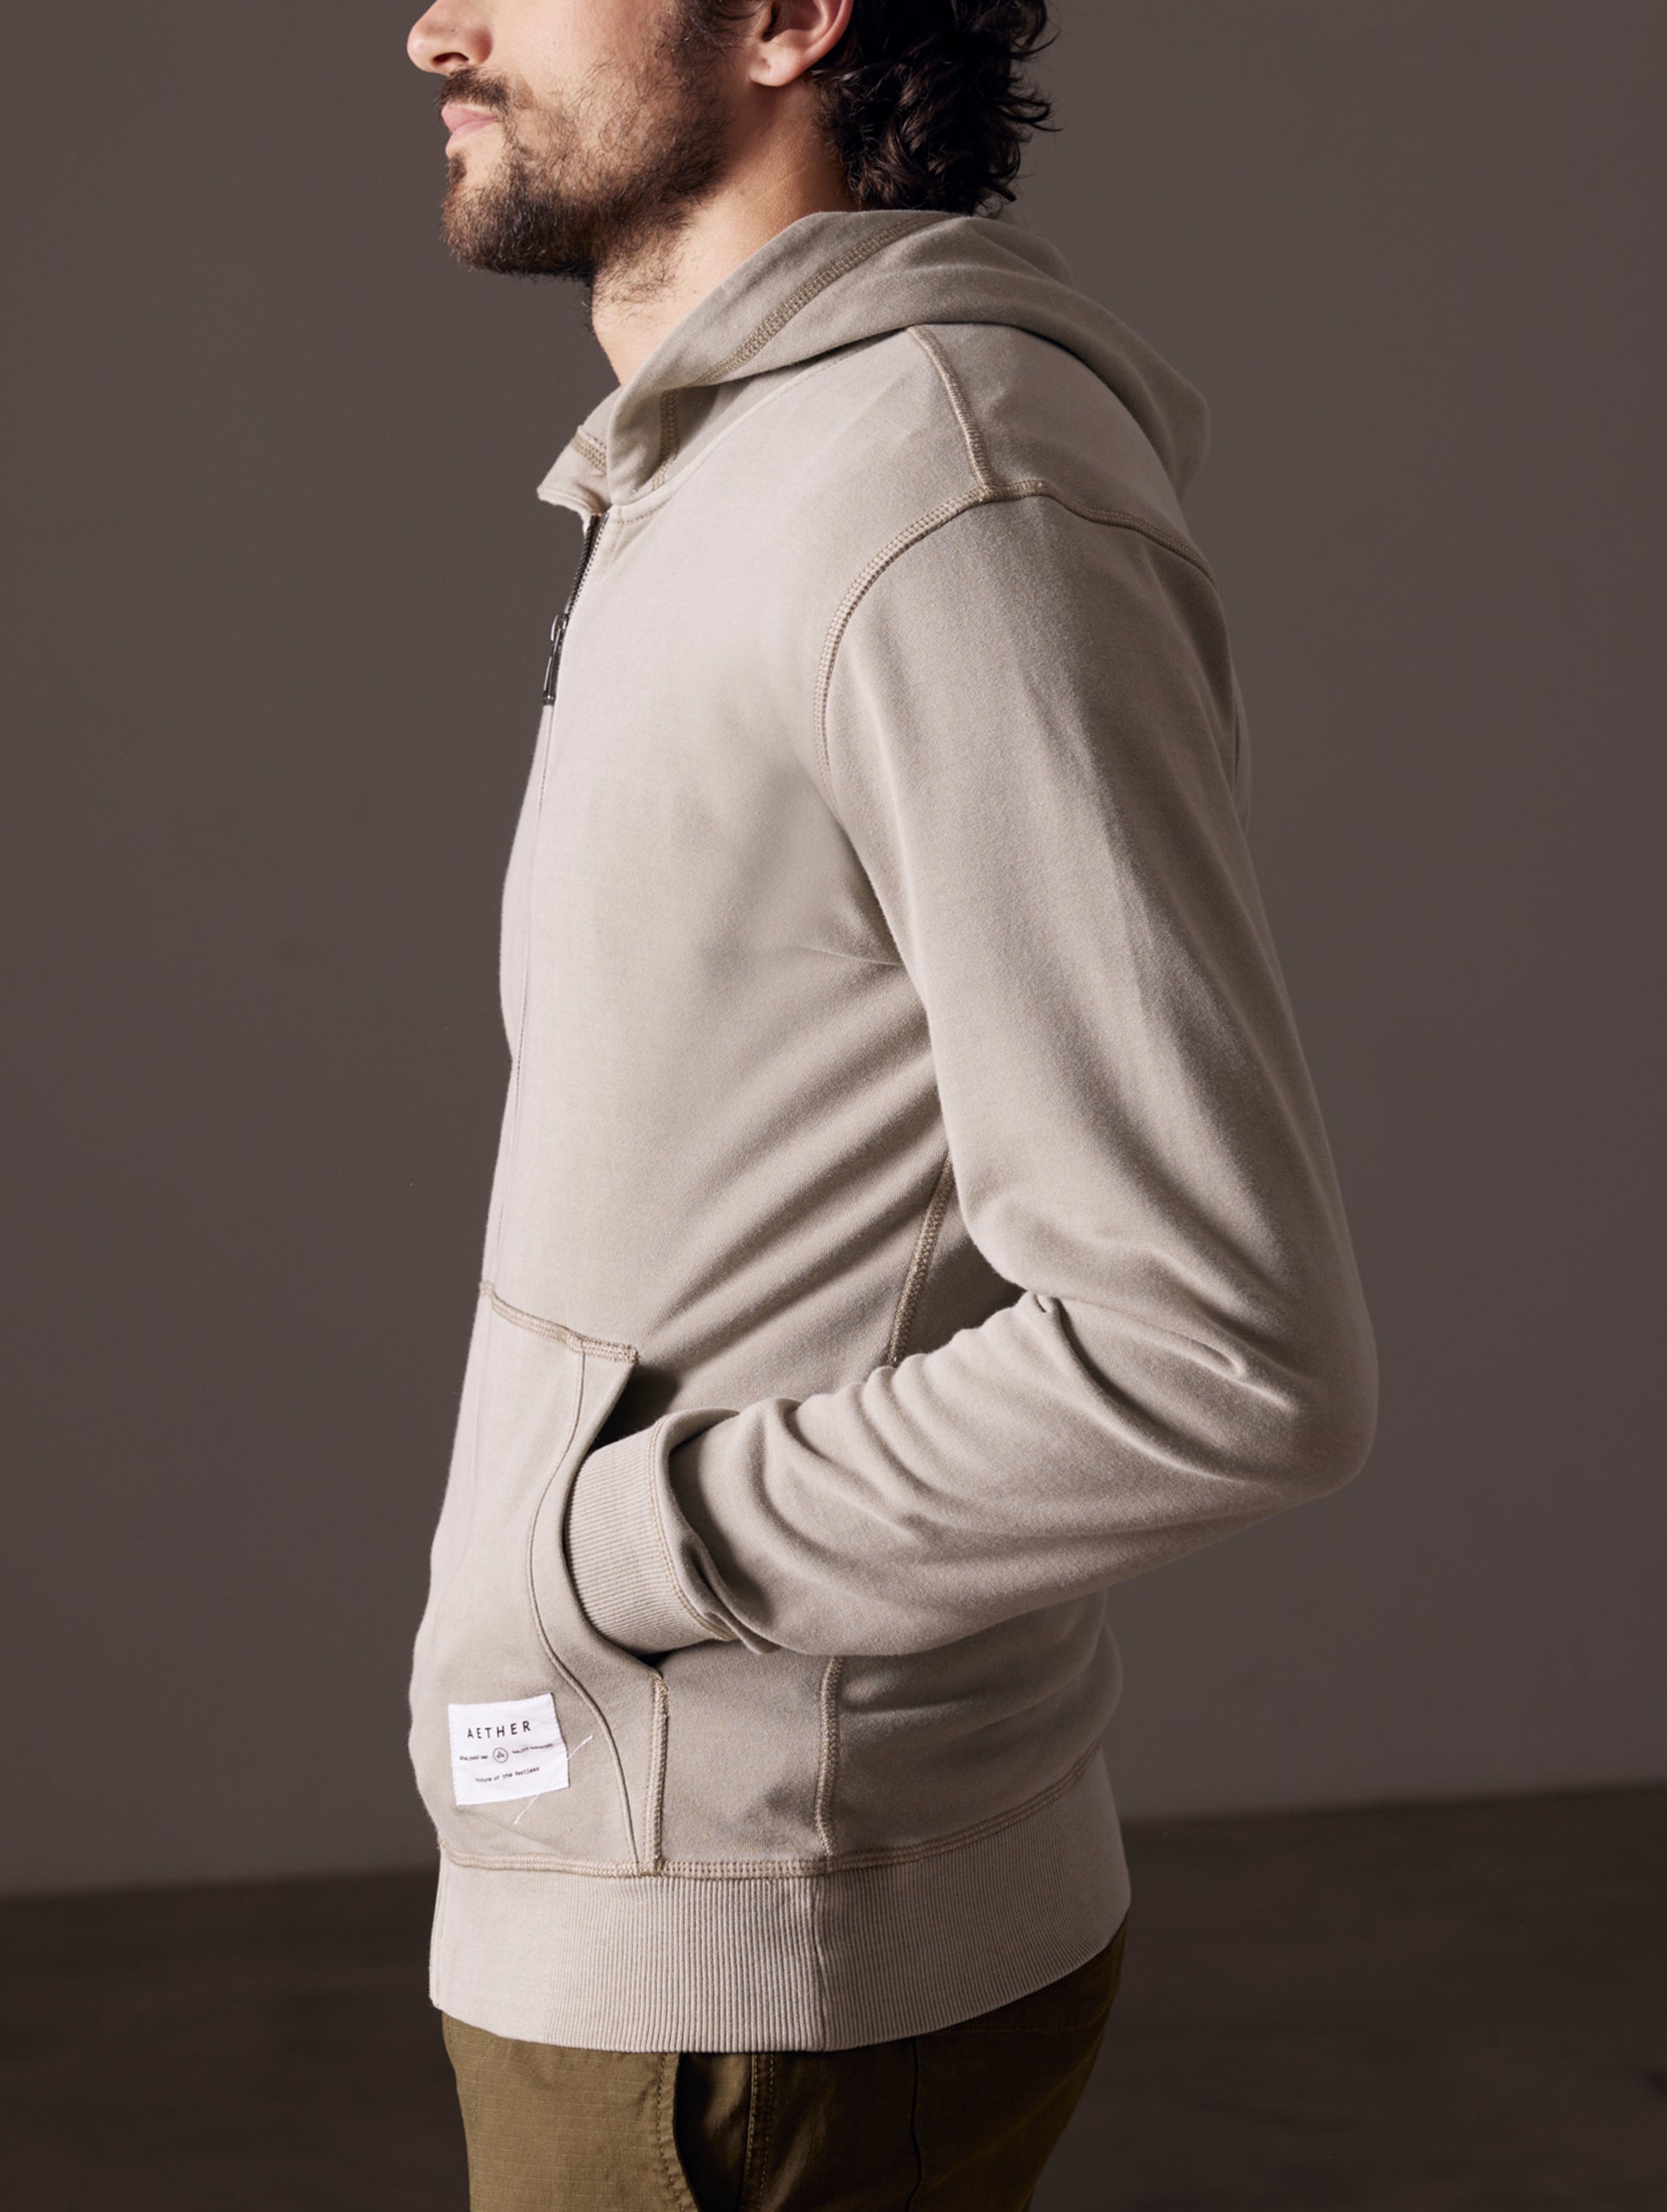 Grey full-zip hoodie from AETHER Apparel